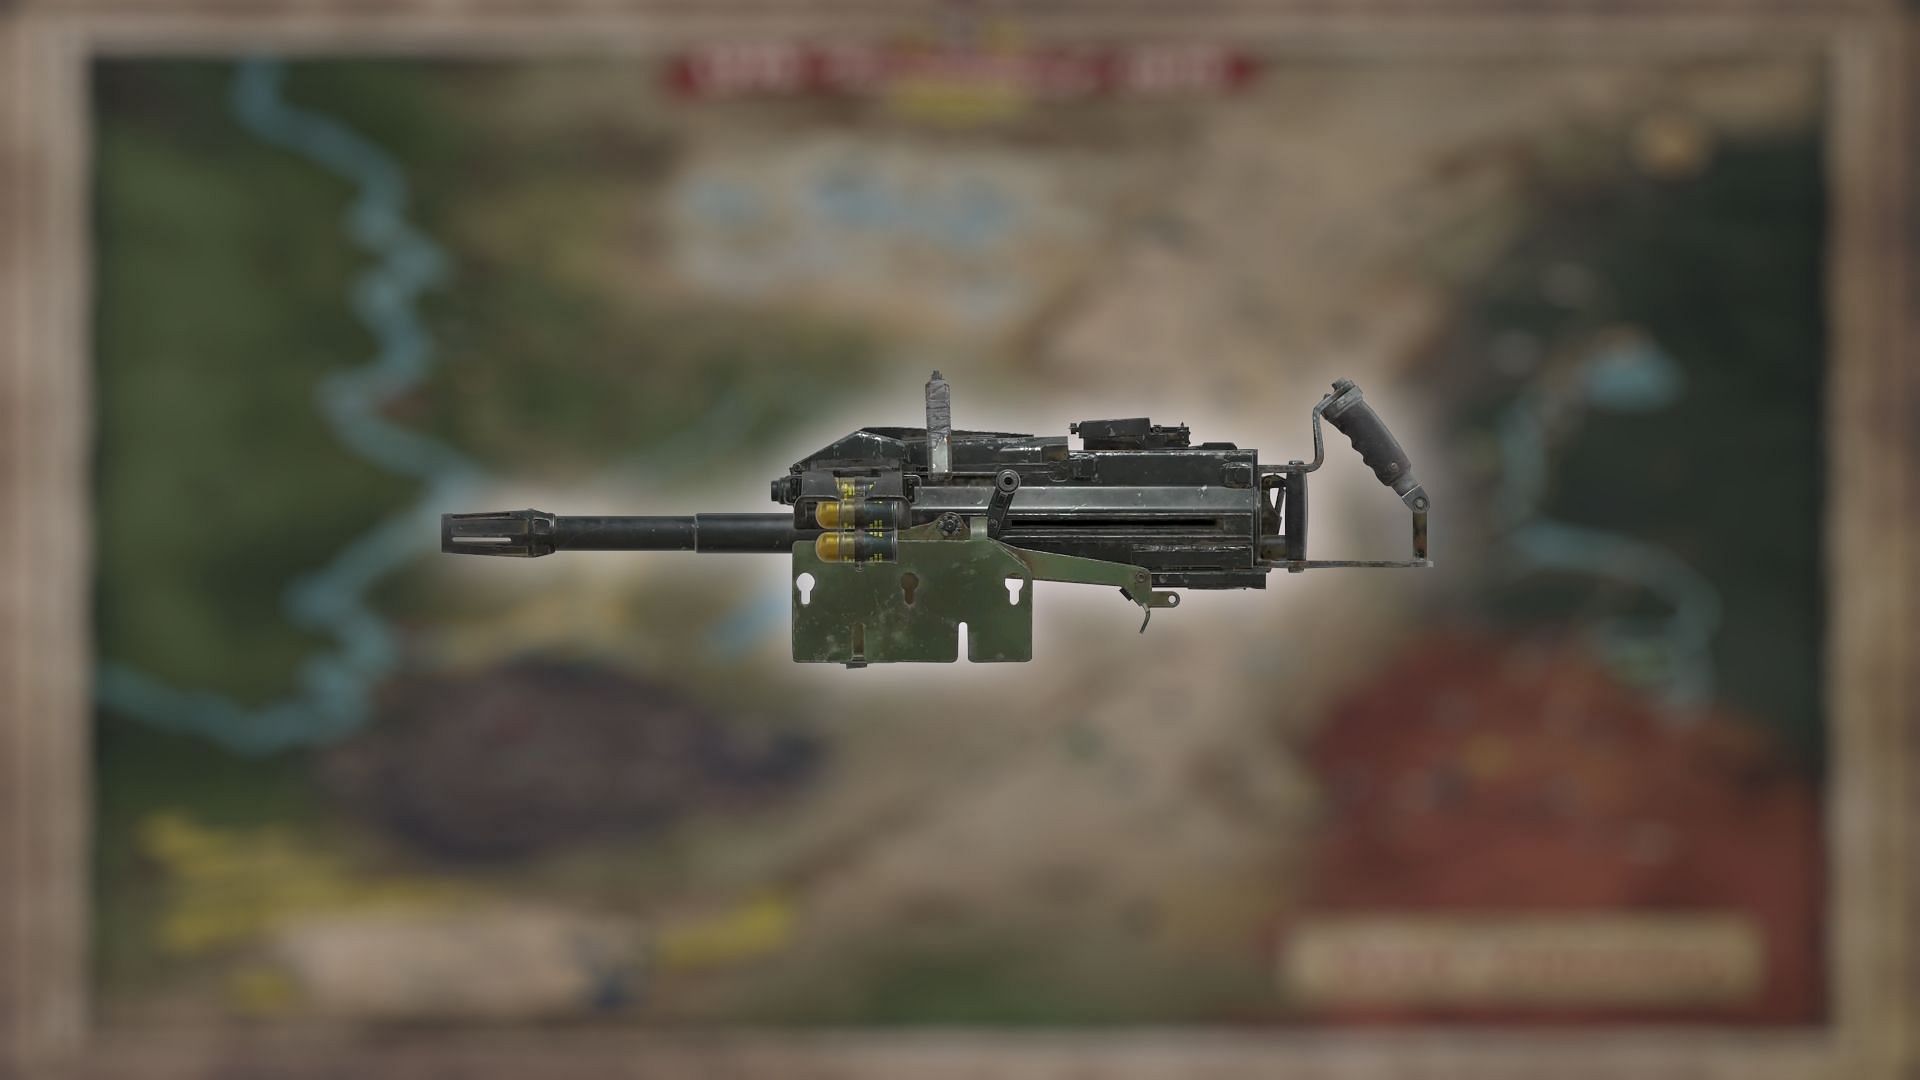 The Auto Grenade Launcher in Fallout 76 (Image via Bethesda Game Studios)